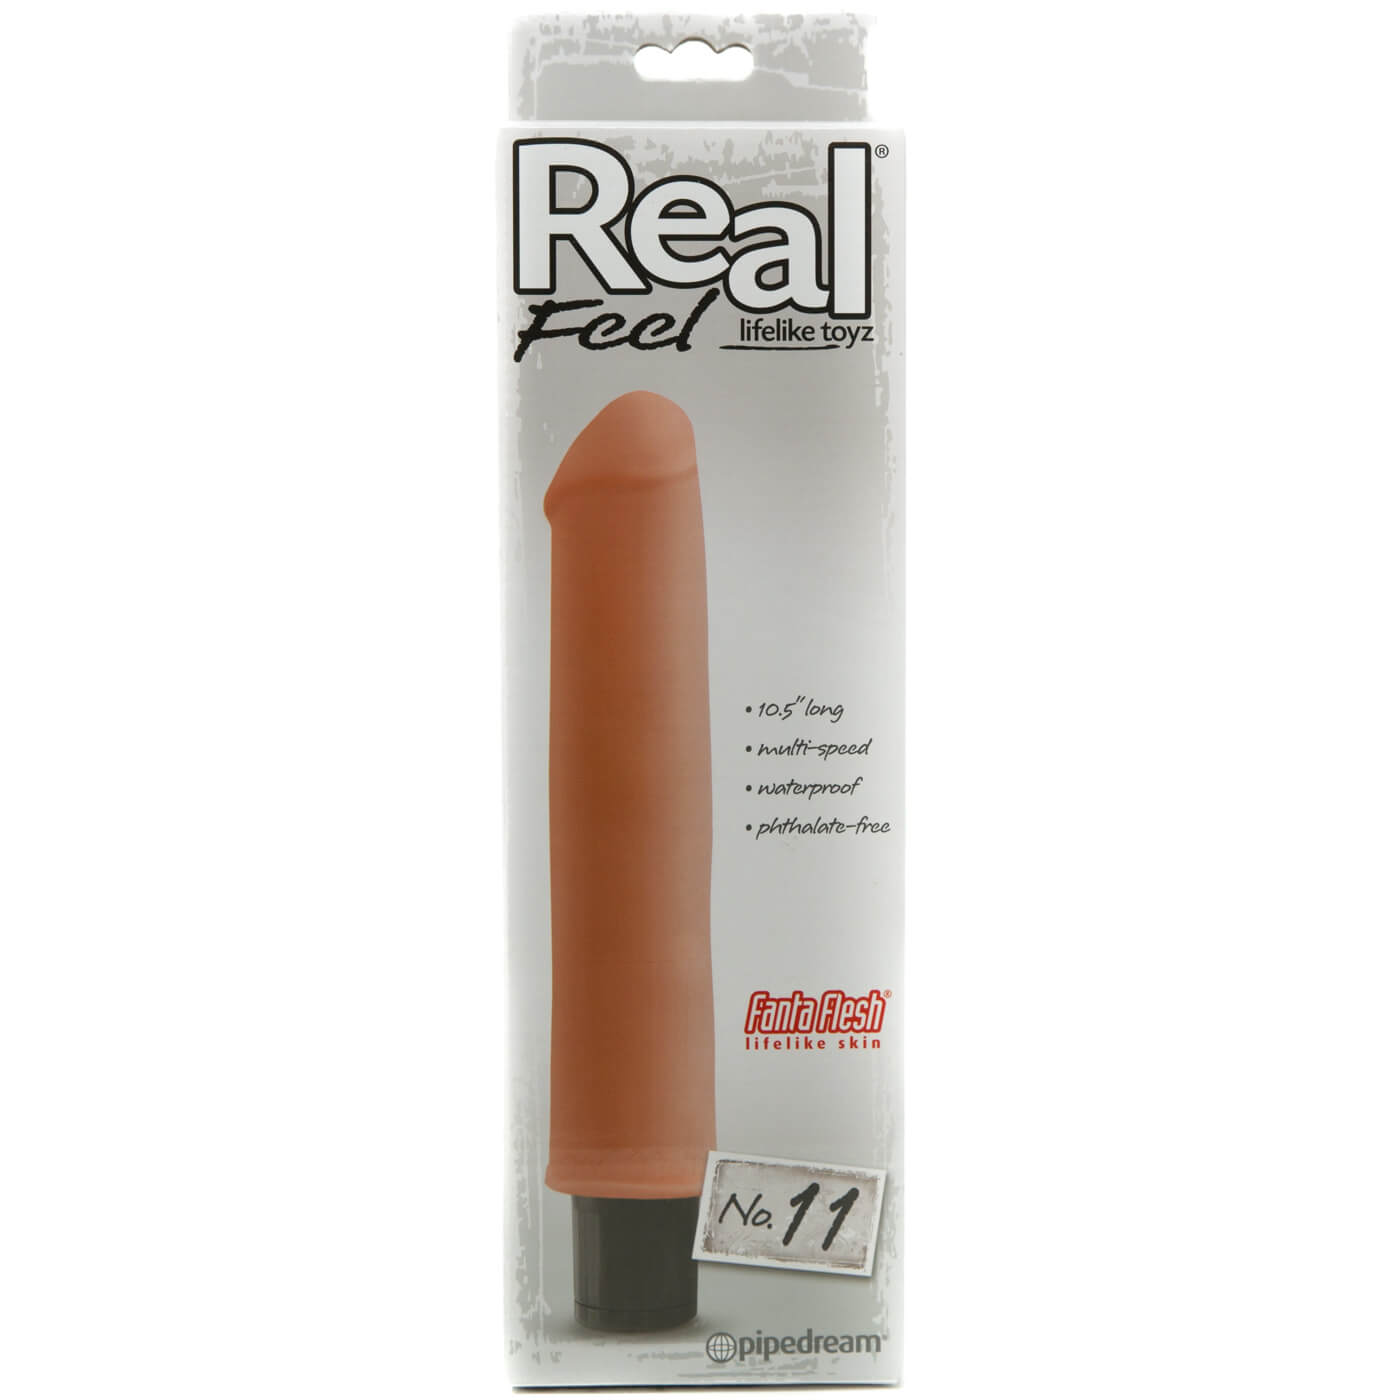 Real Feel No.11 Waterproof 11 Inch Realistic Dildo Vibrator